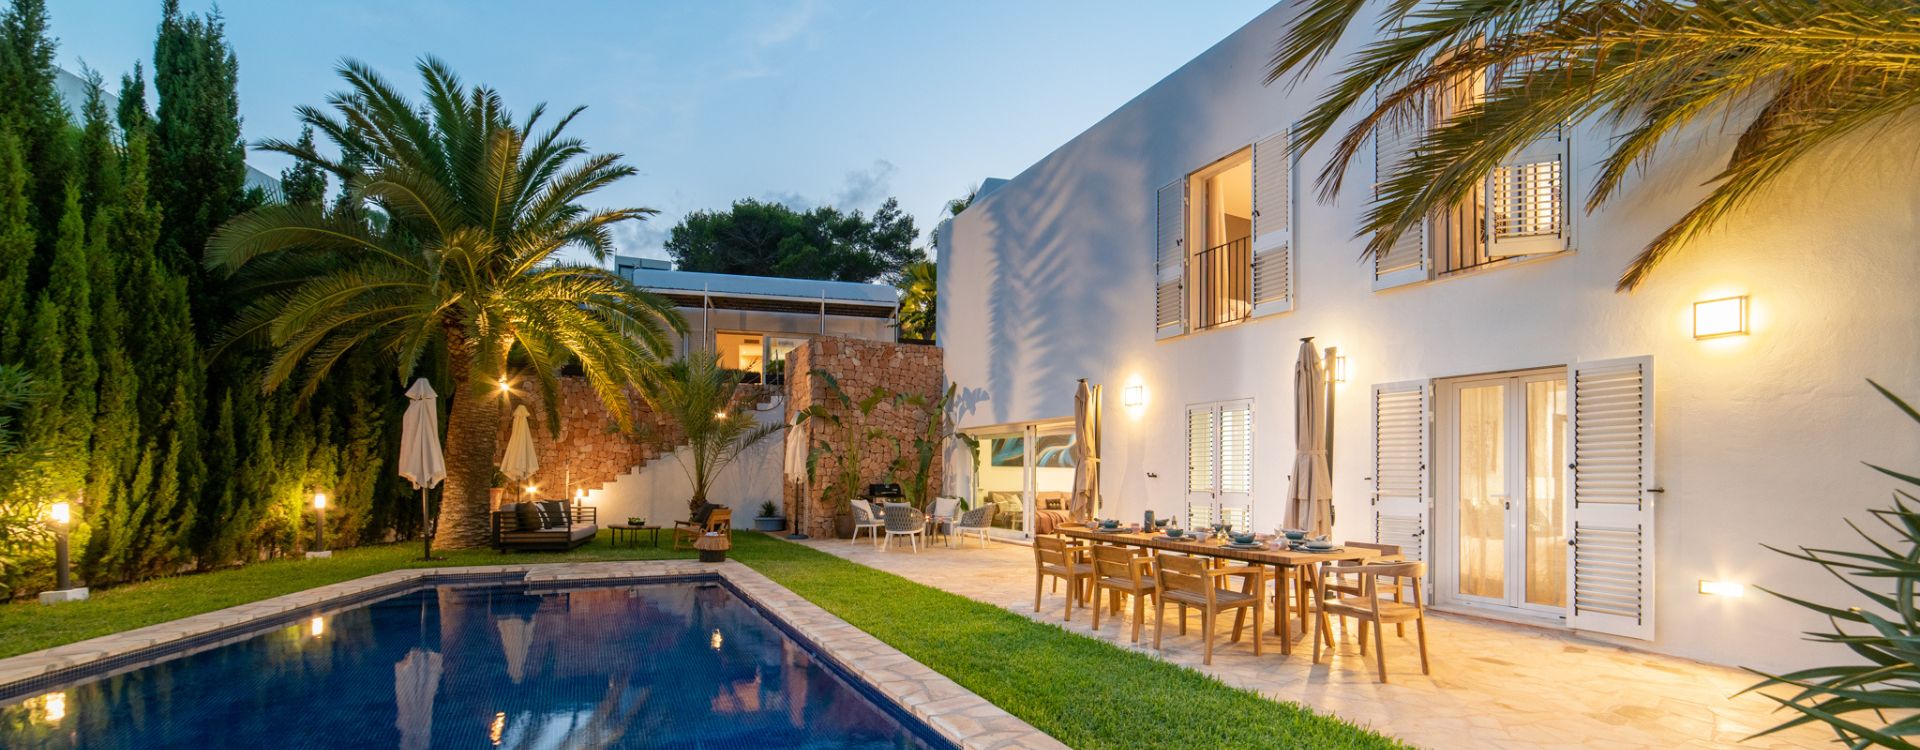 Villa Natalie te huur in Cap Martinet in Ibiza. 